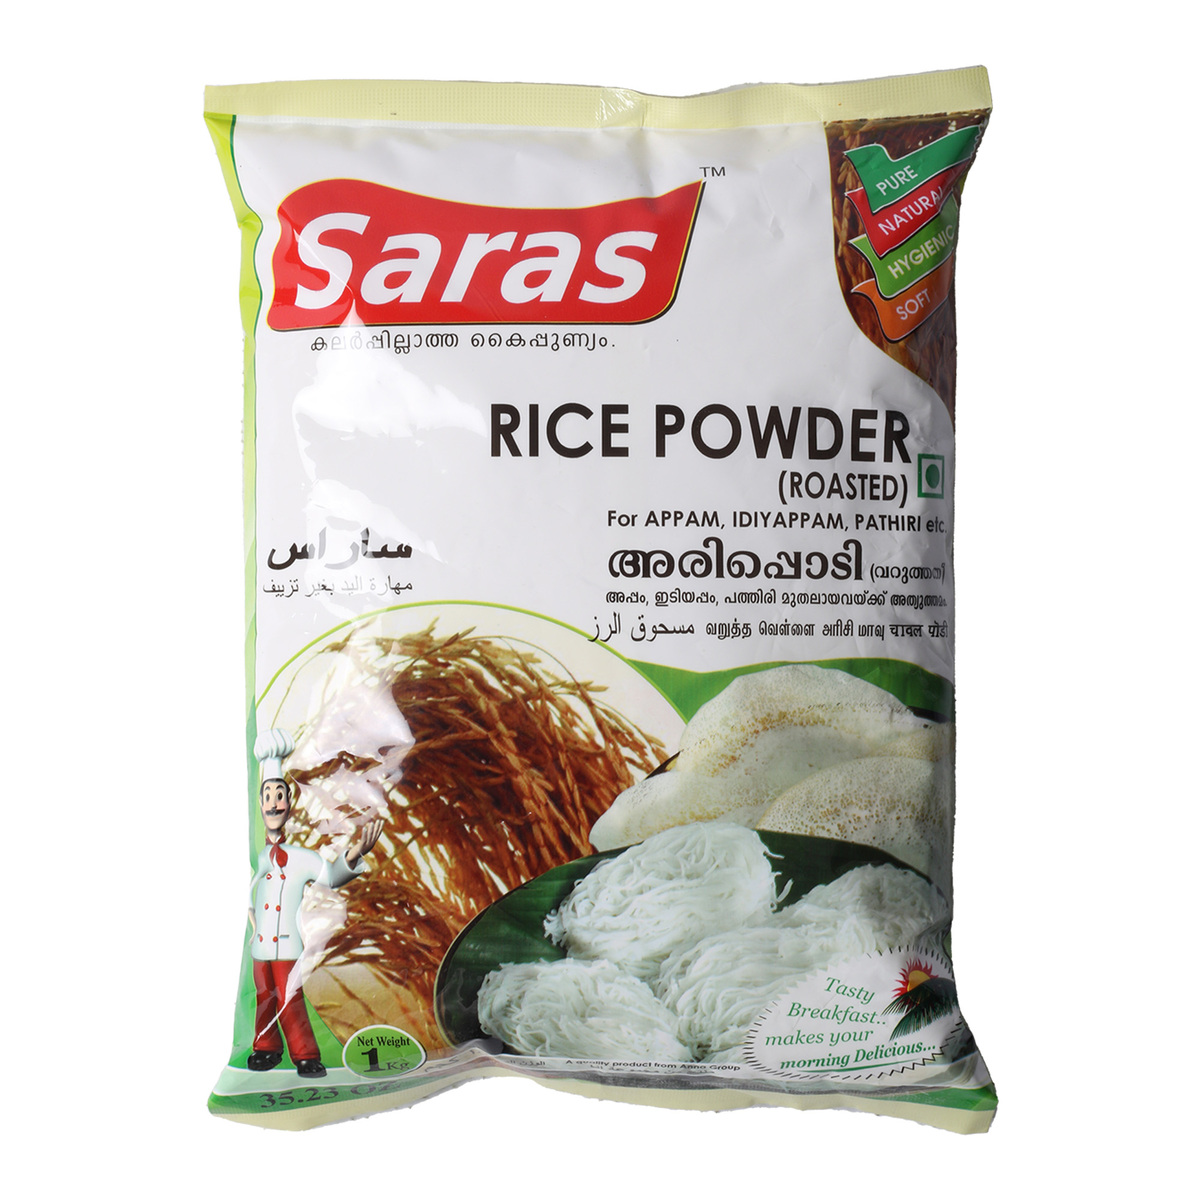 Saras Rice Powder Roasted 1kg